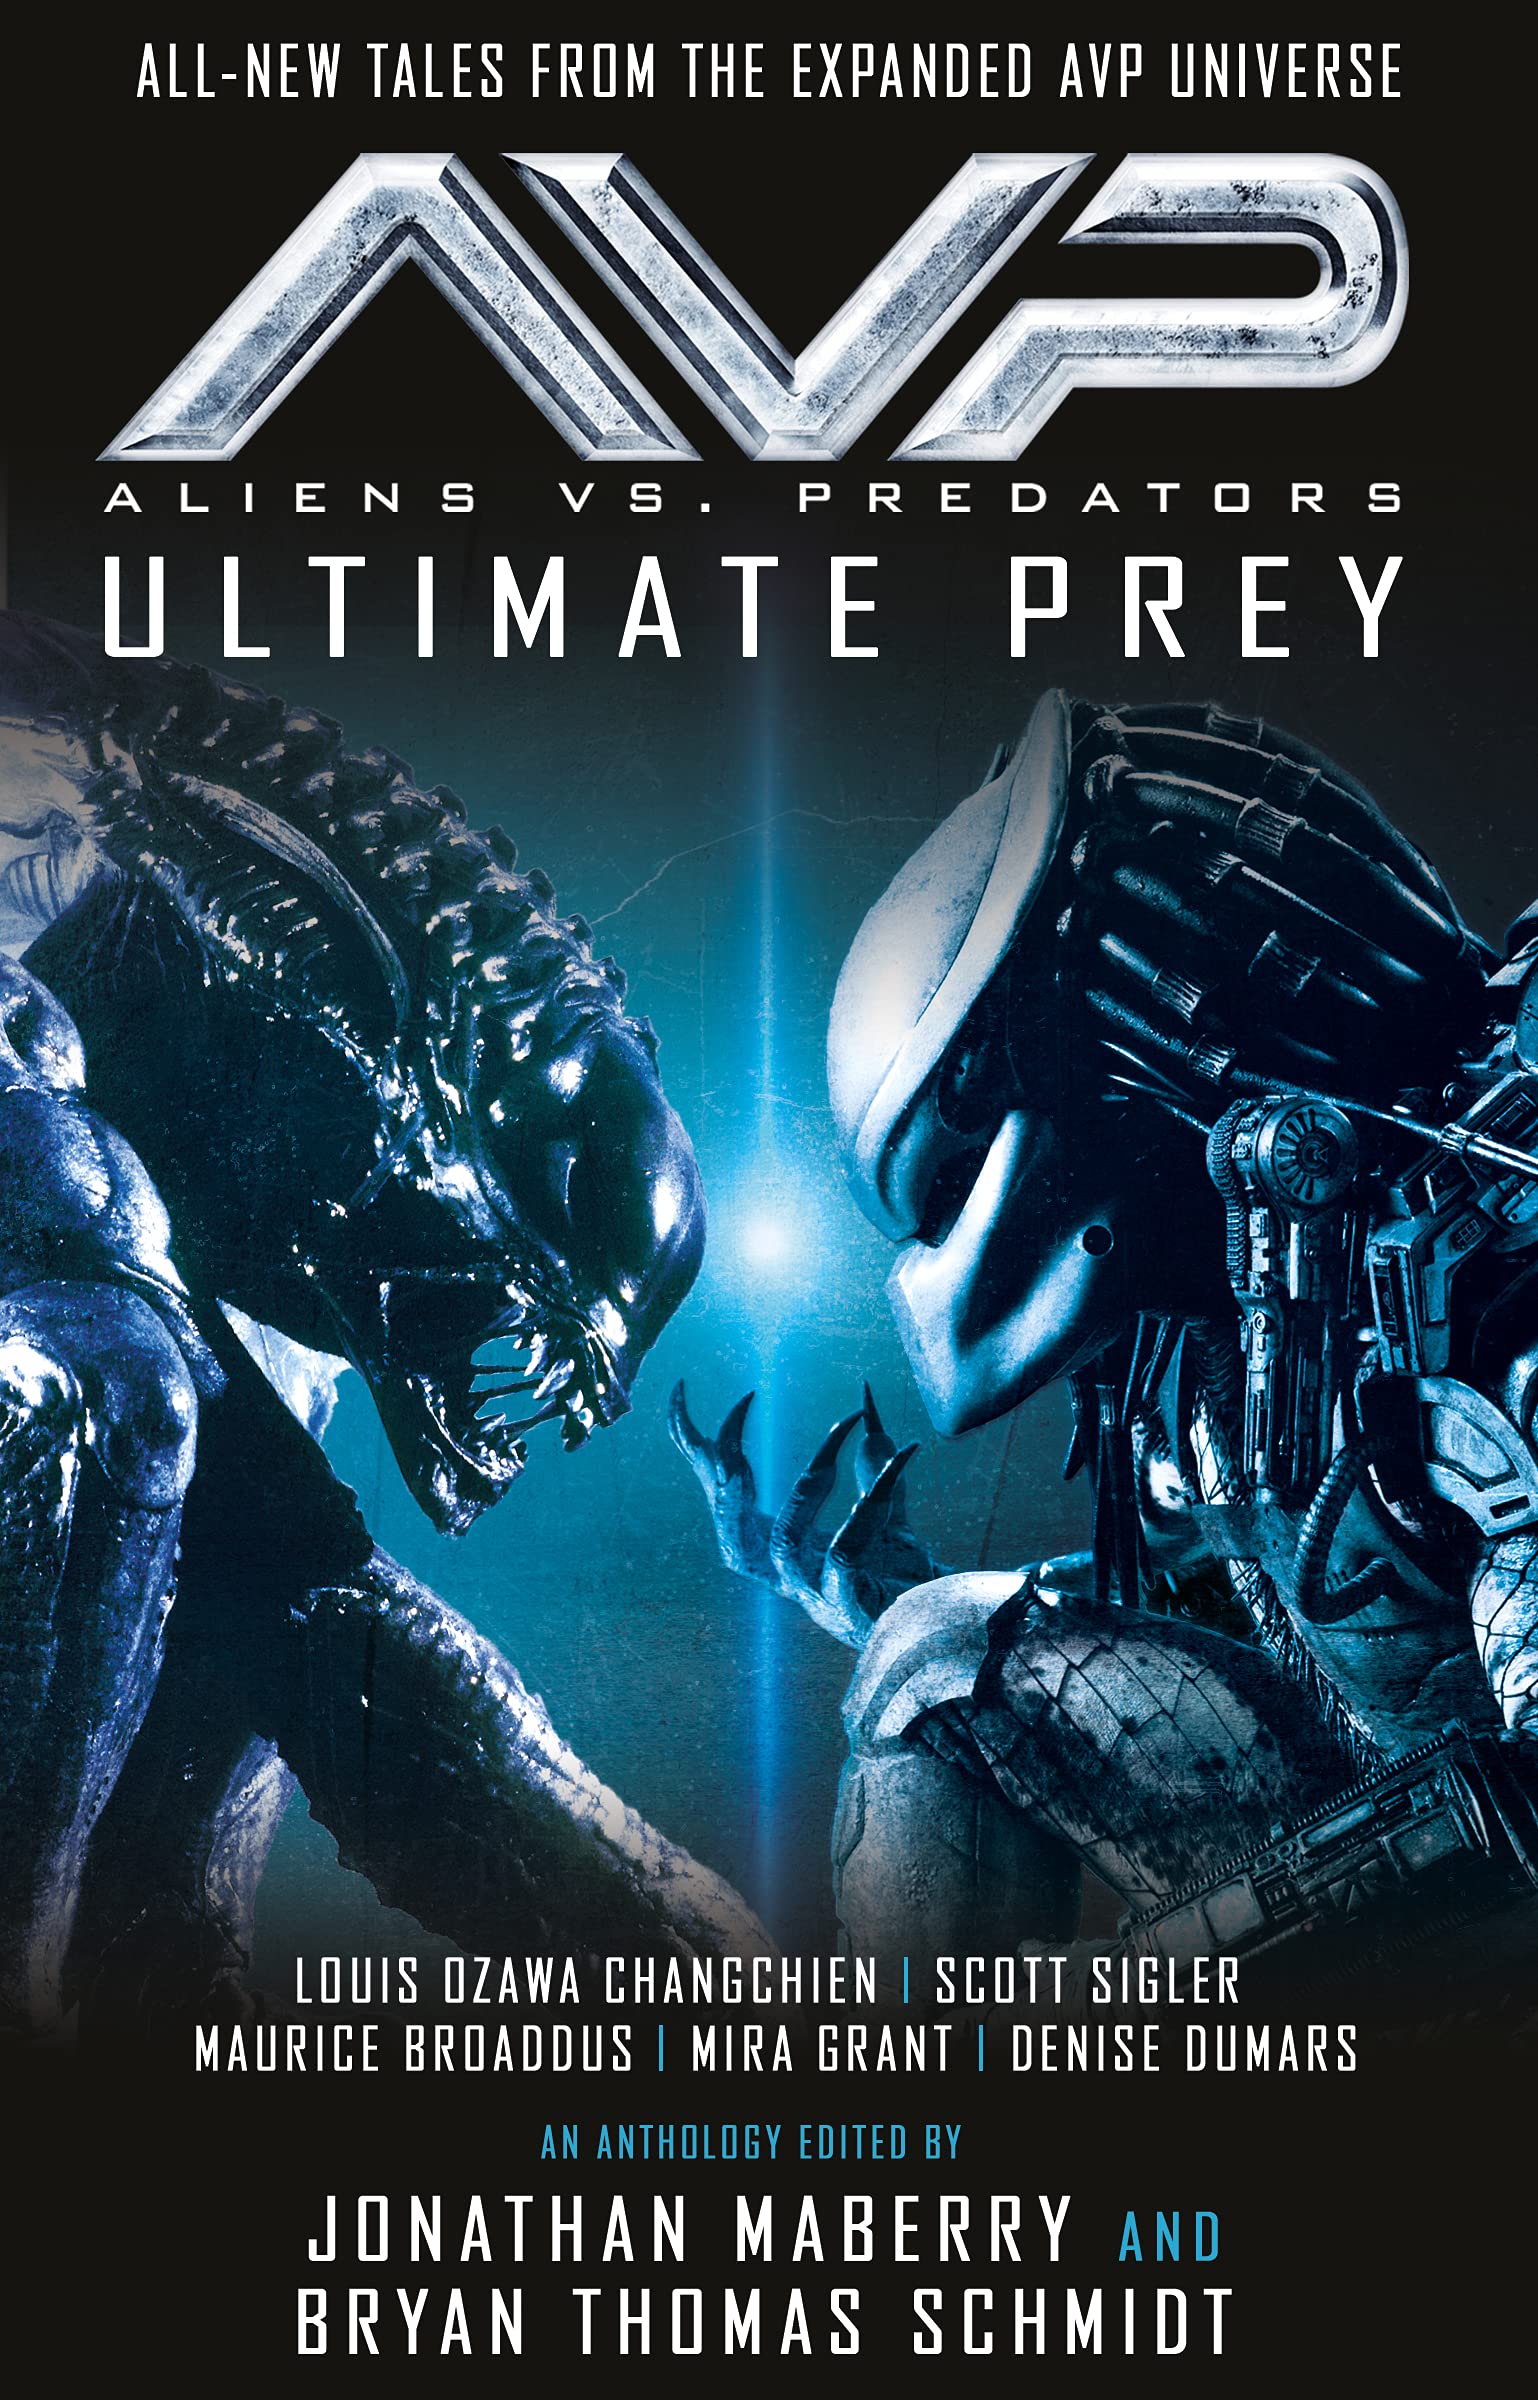 Alien/ Predtaor Timeline, Wiki